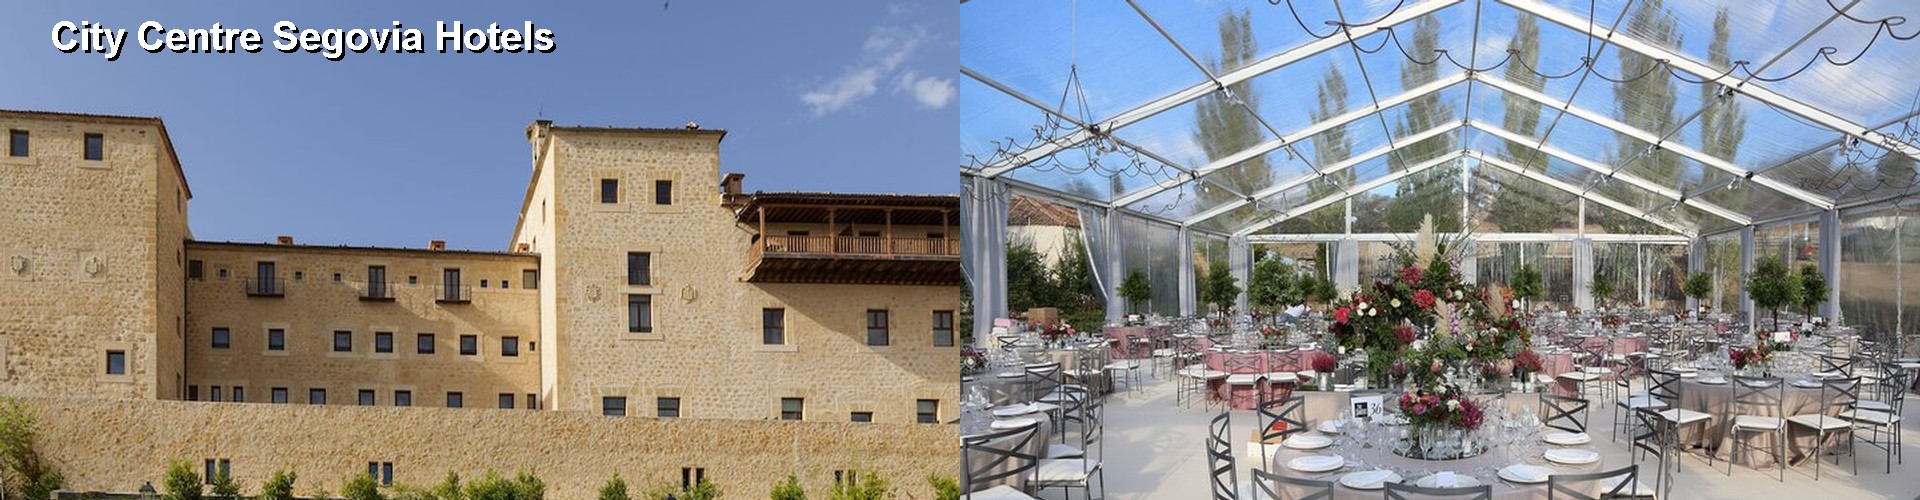 5 Best Hotels near City Centre Segovia